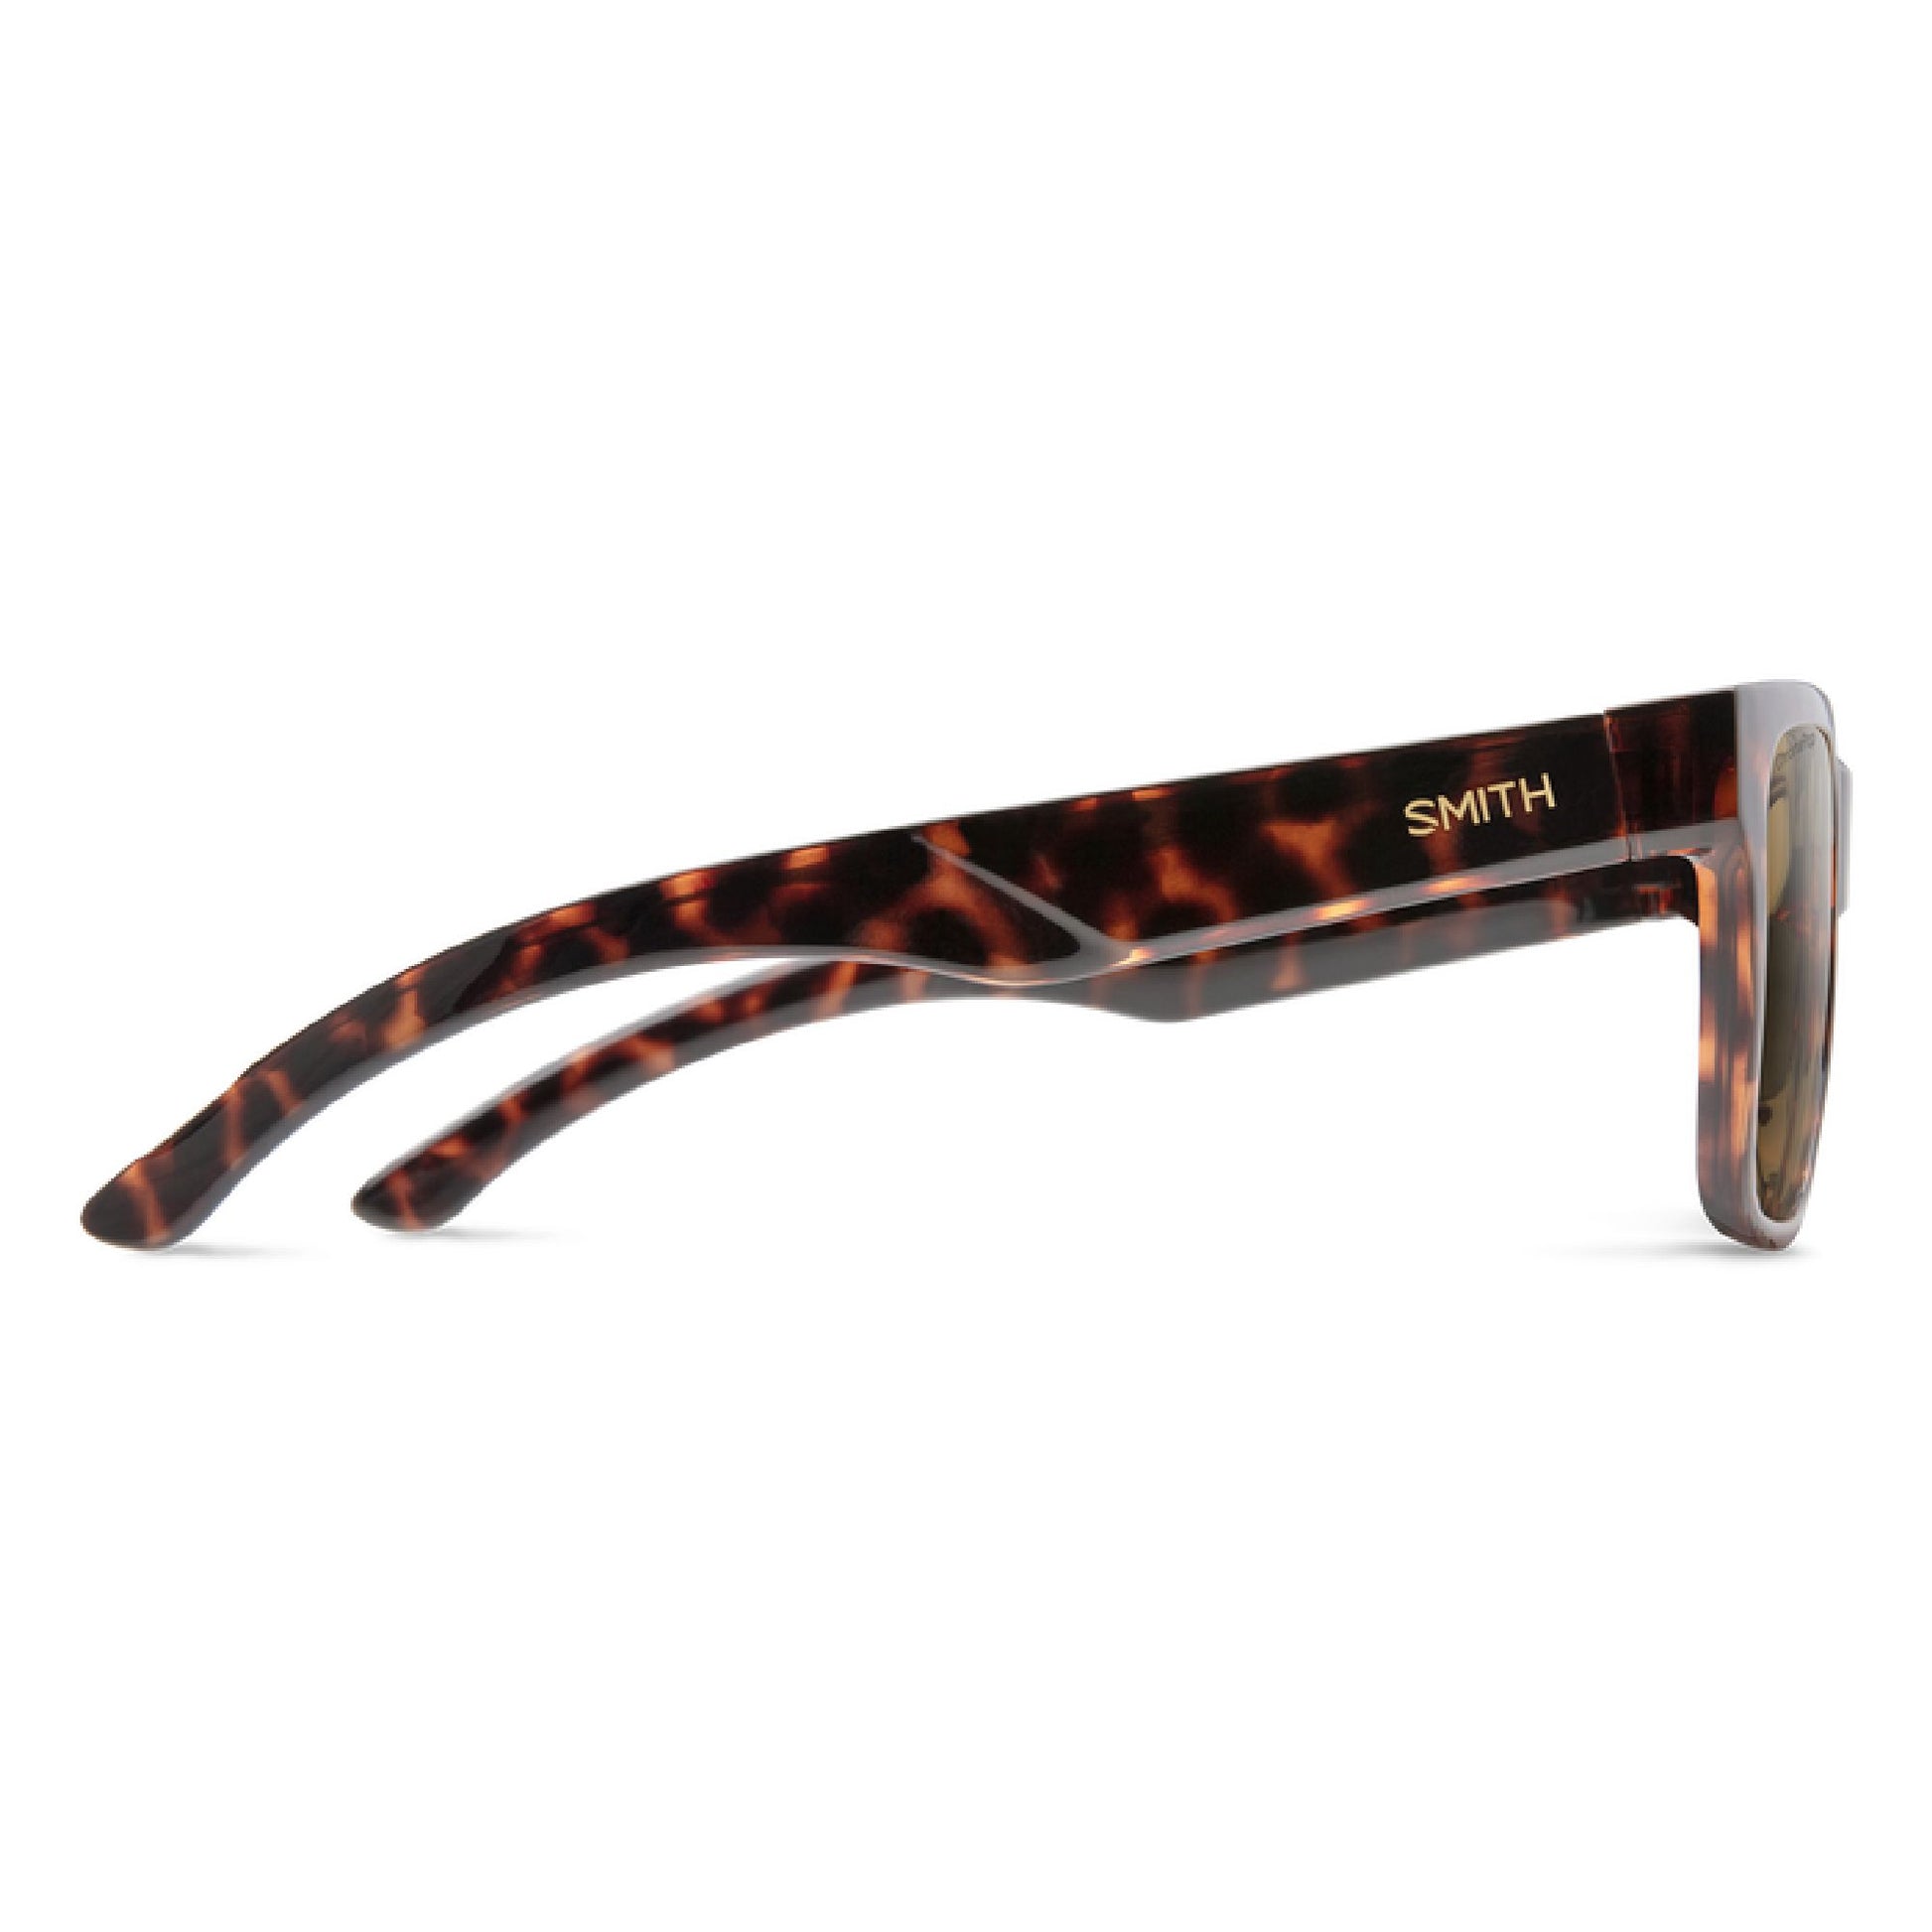 Smith Lowdown 2 Sunglasses Tortoise ChromaPop Glass Polarized Brown Lens Sunglasses